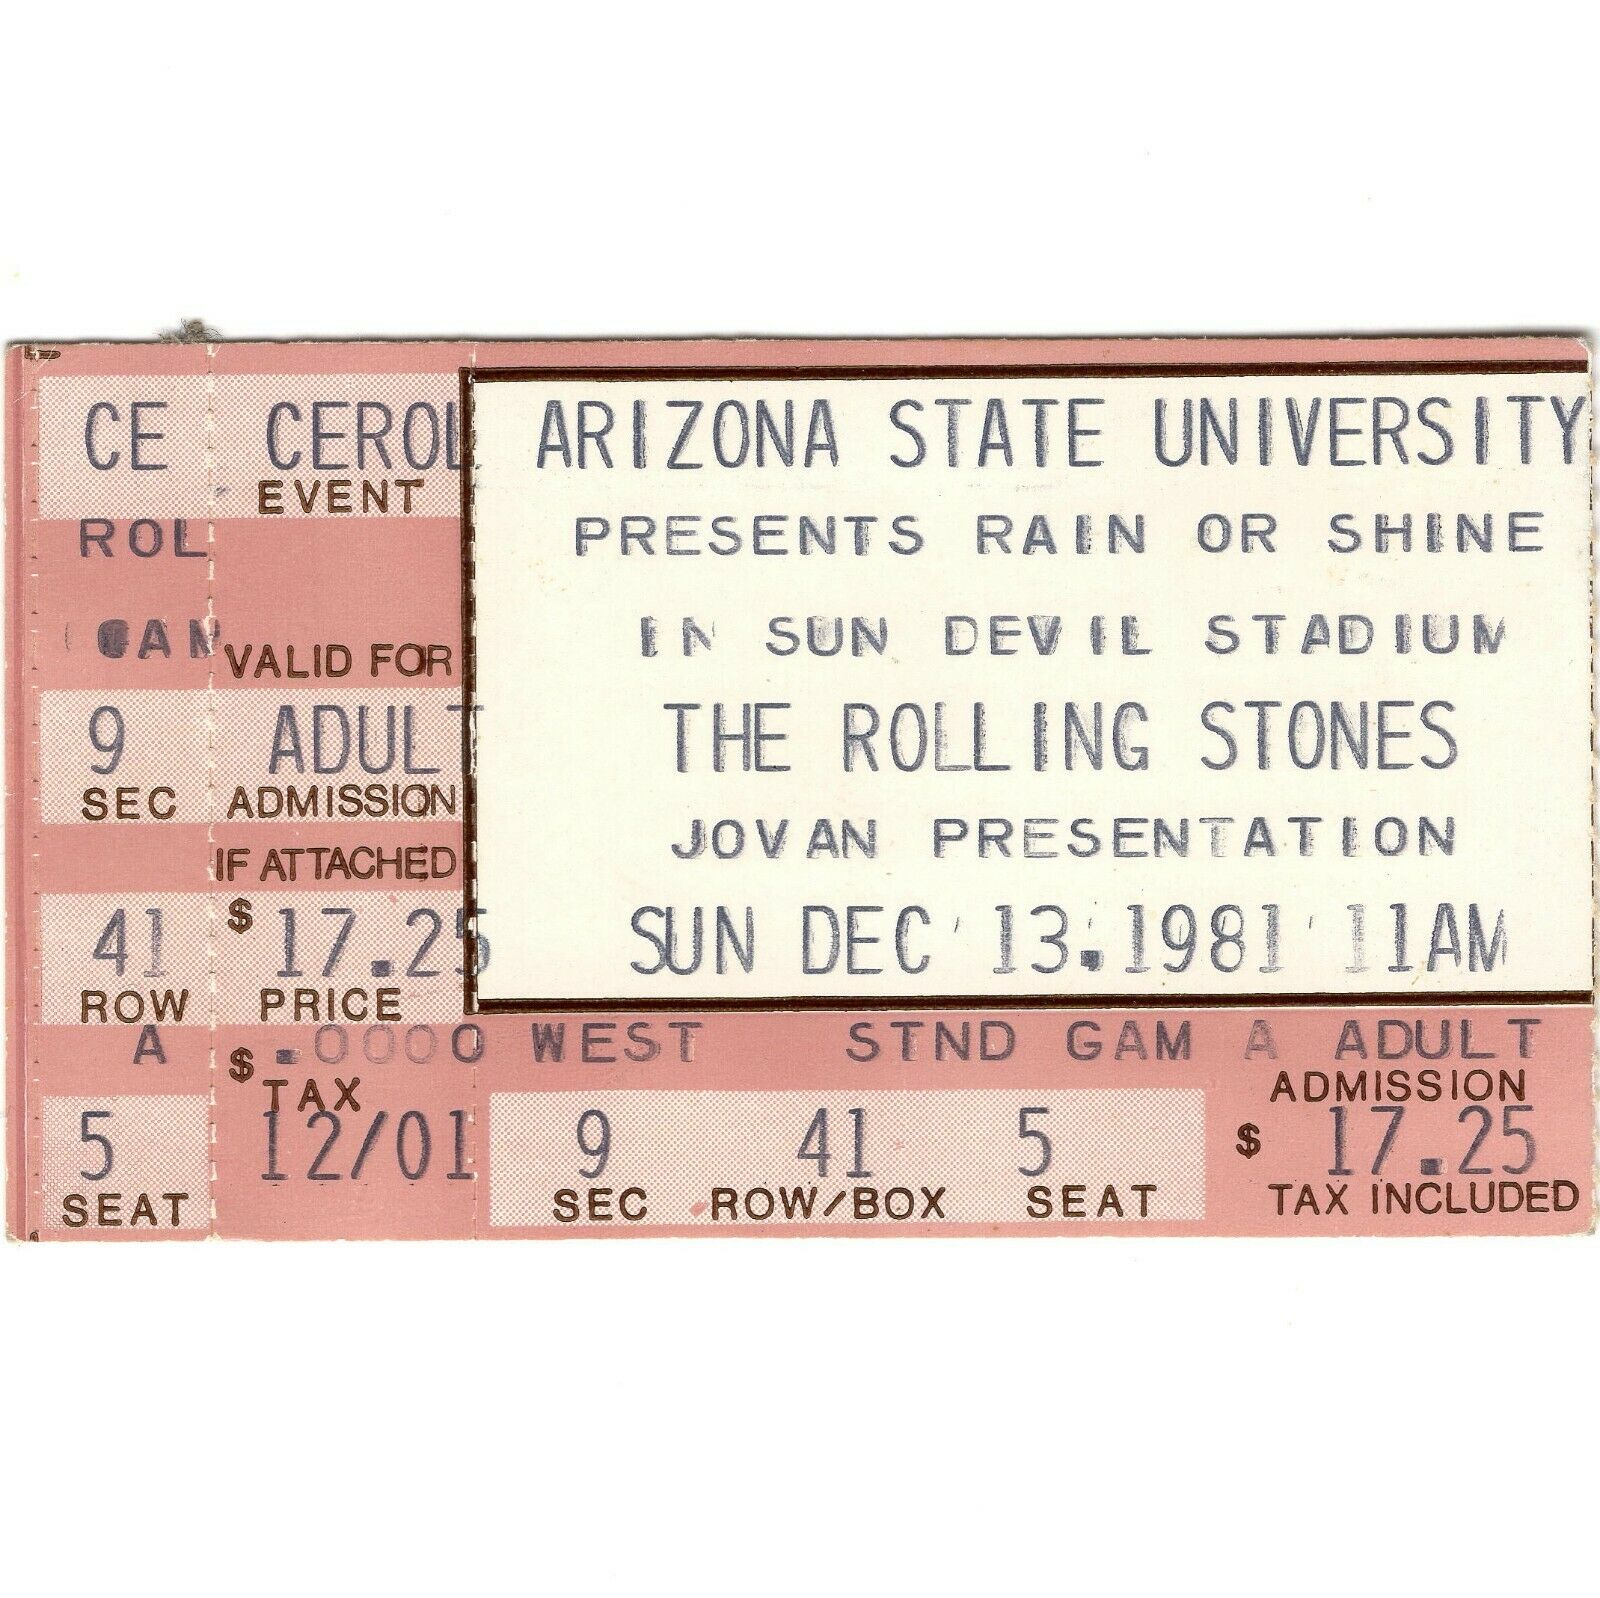 THE ROLLING STONES Concert Ticket Stub TEMPE AZ 12/13/81 SUN DEVIL TATTOO YOU